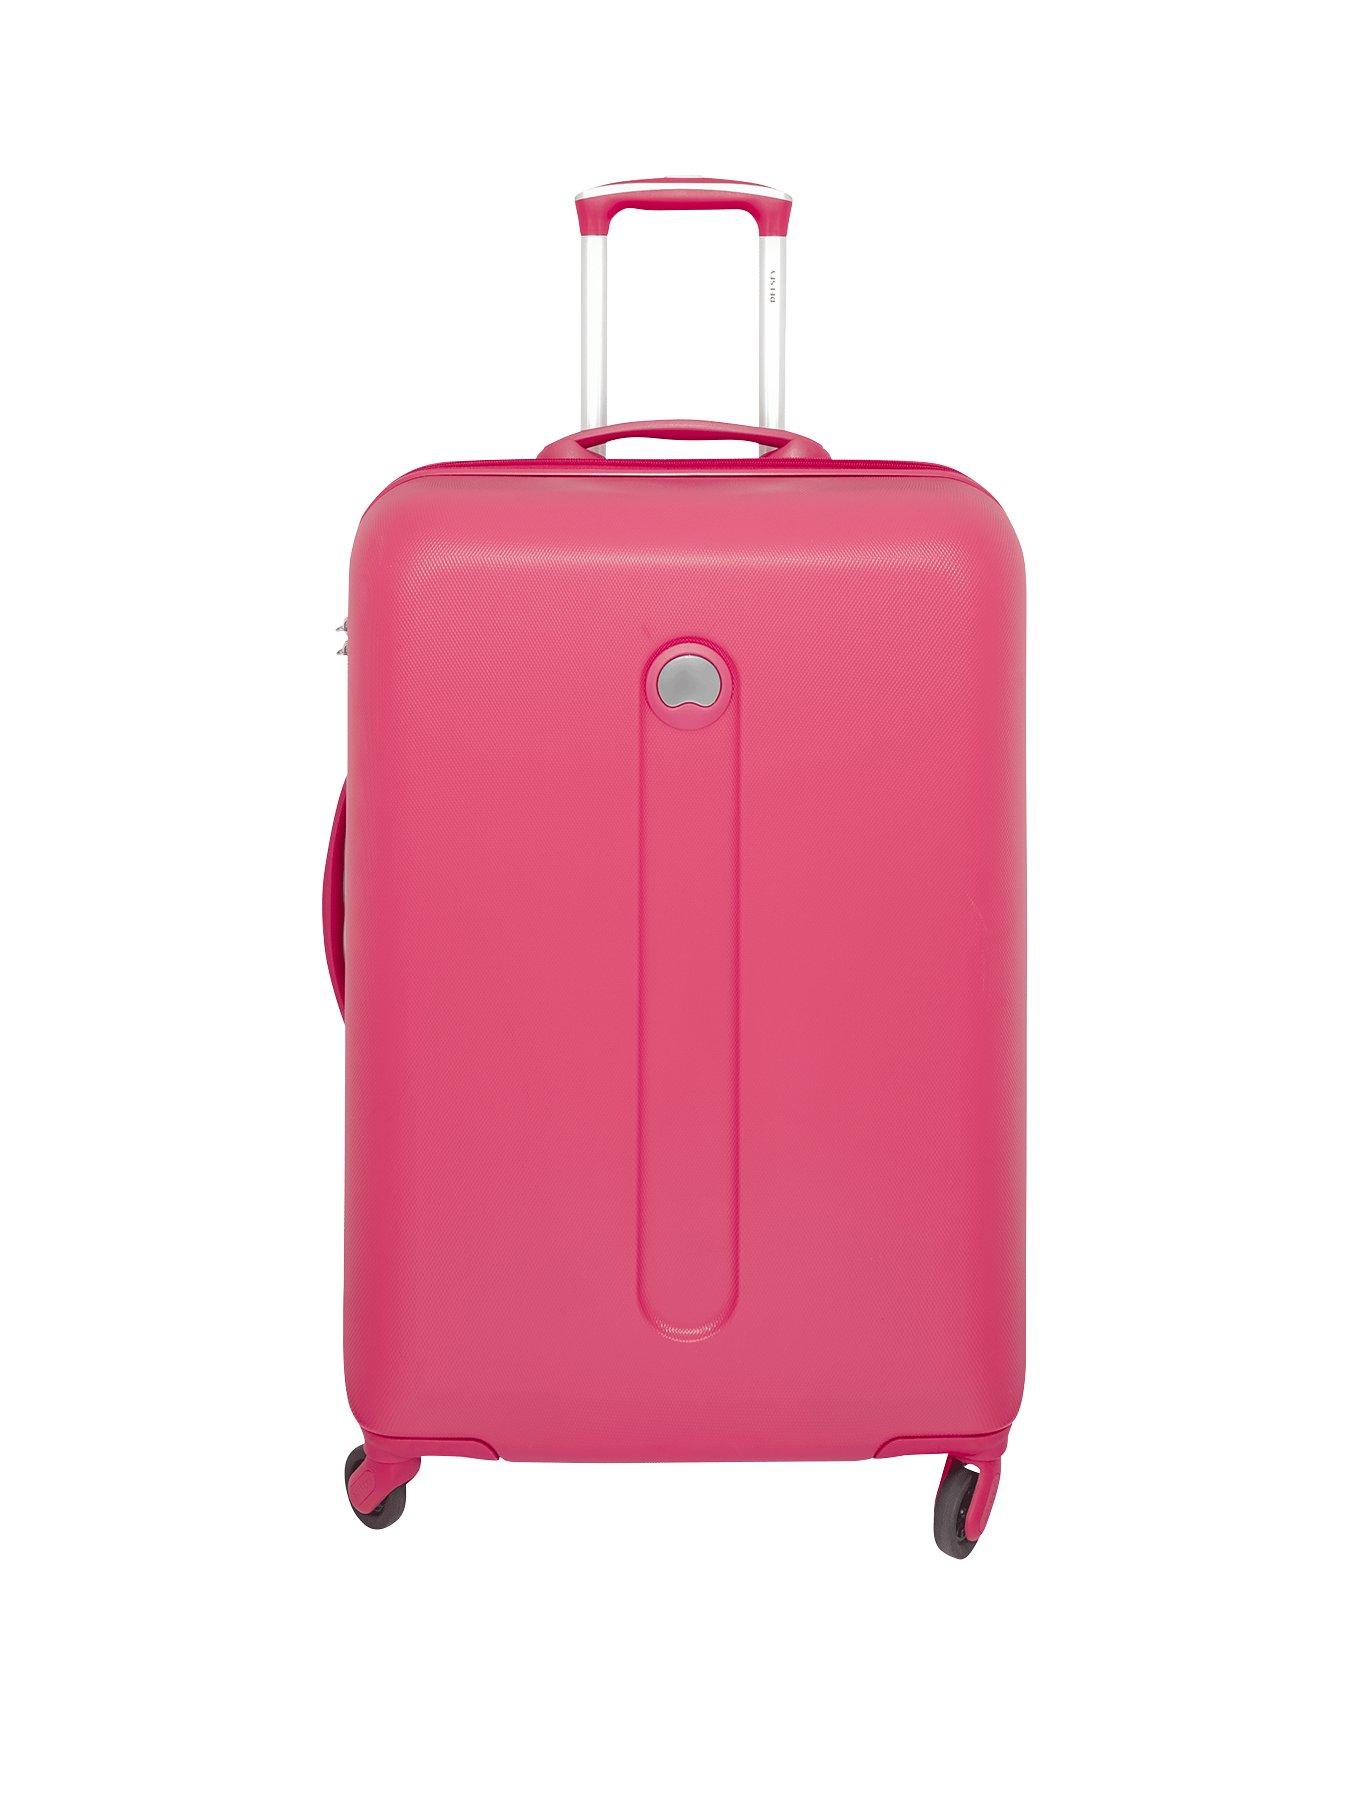 Suitcases UK | Luggage & Suitcases | Very.co.uk